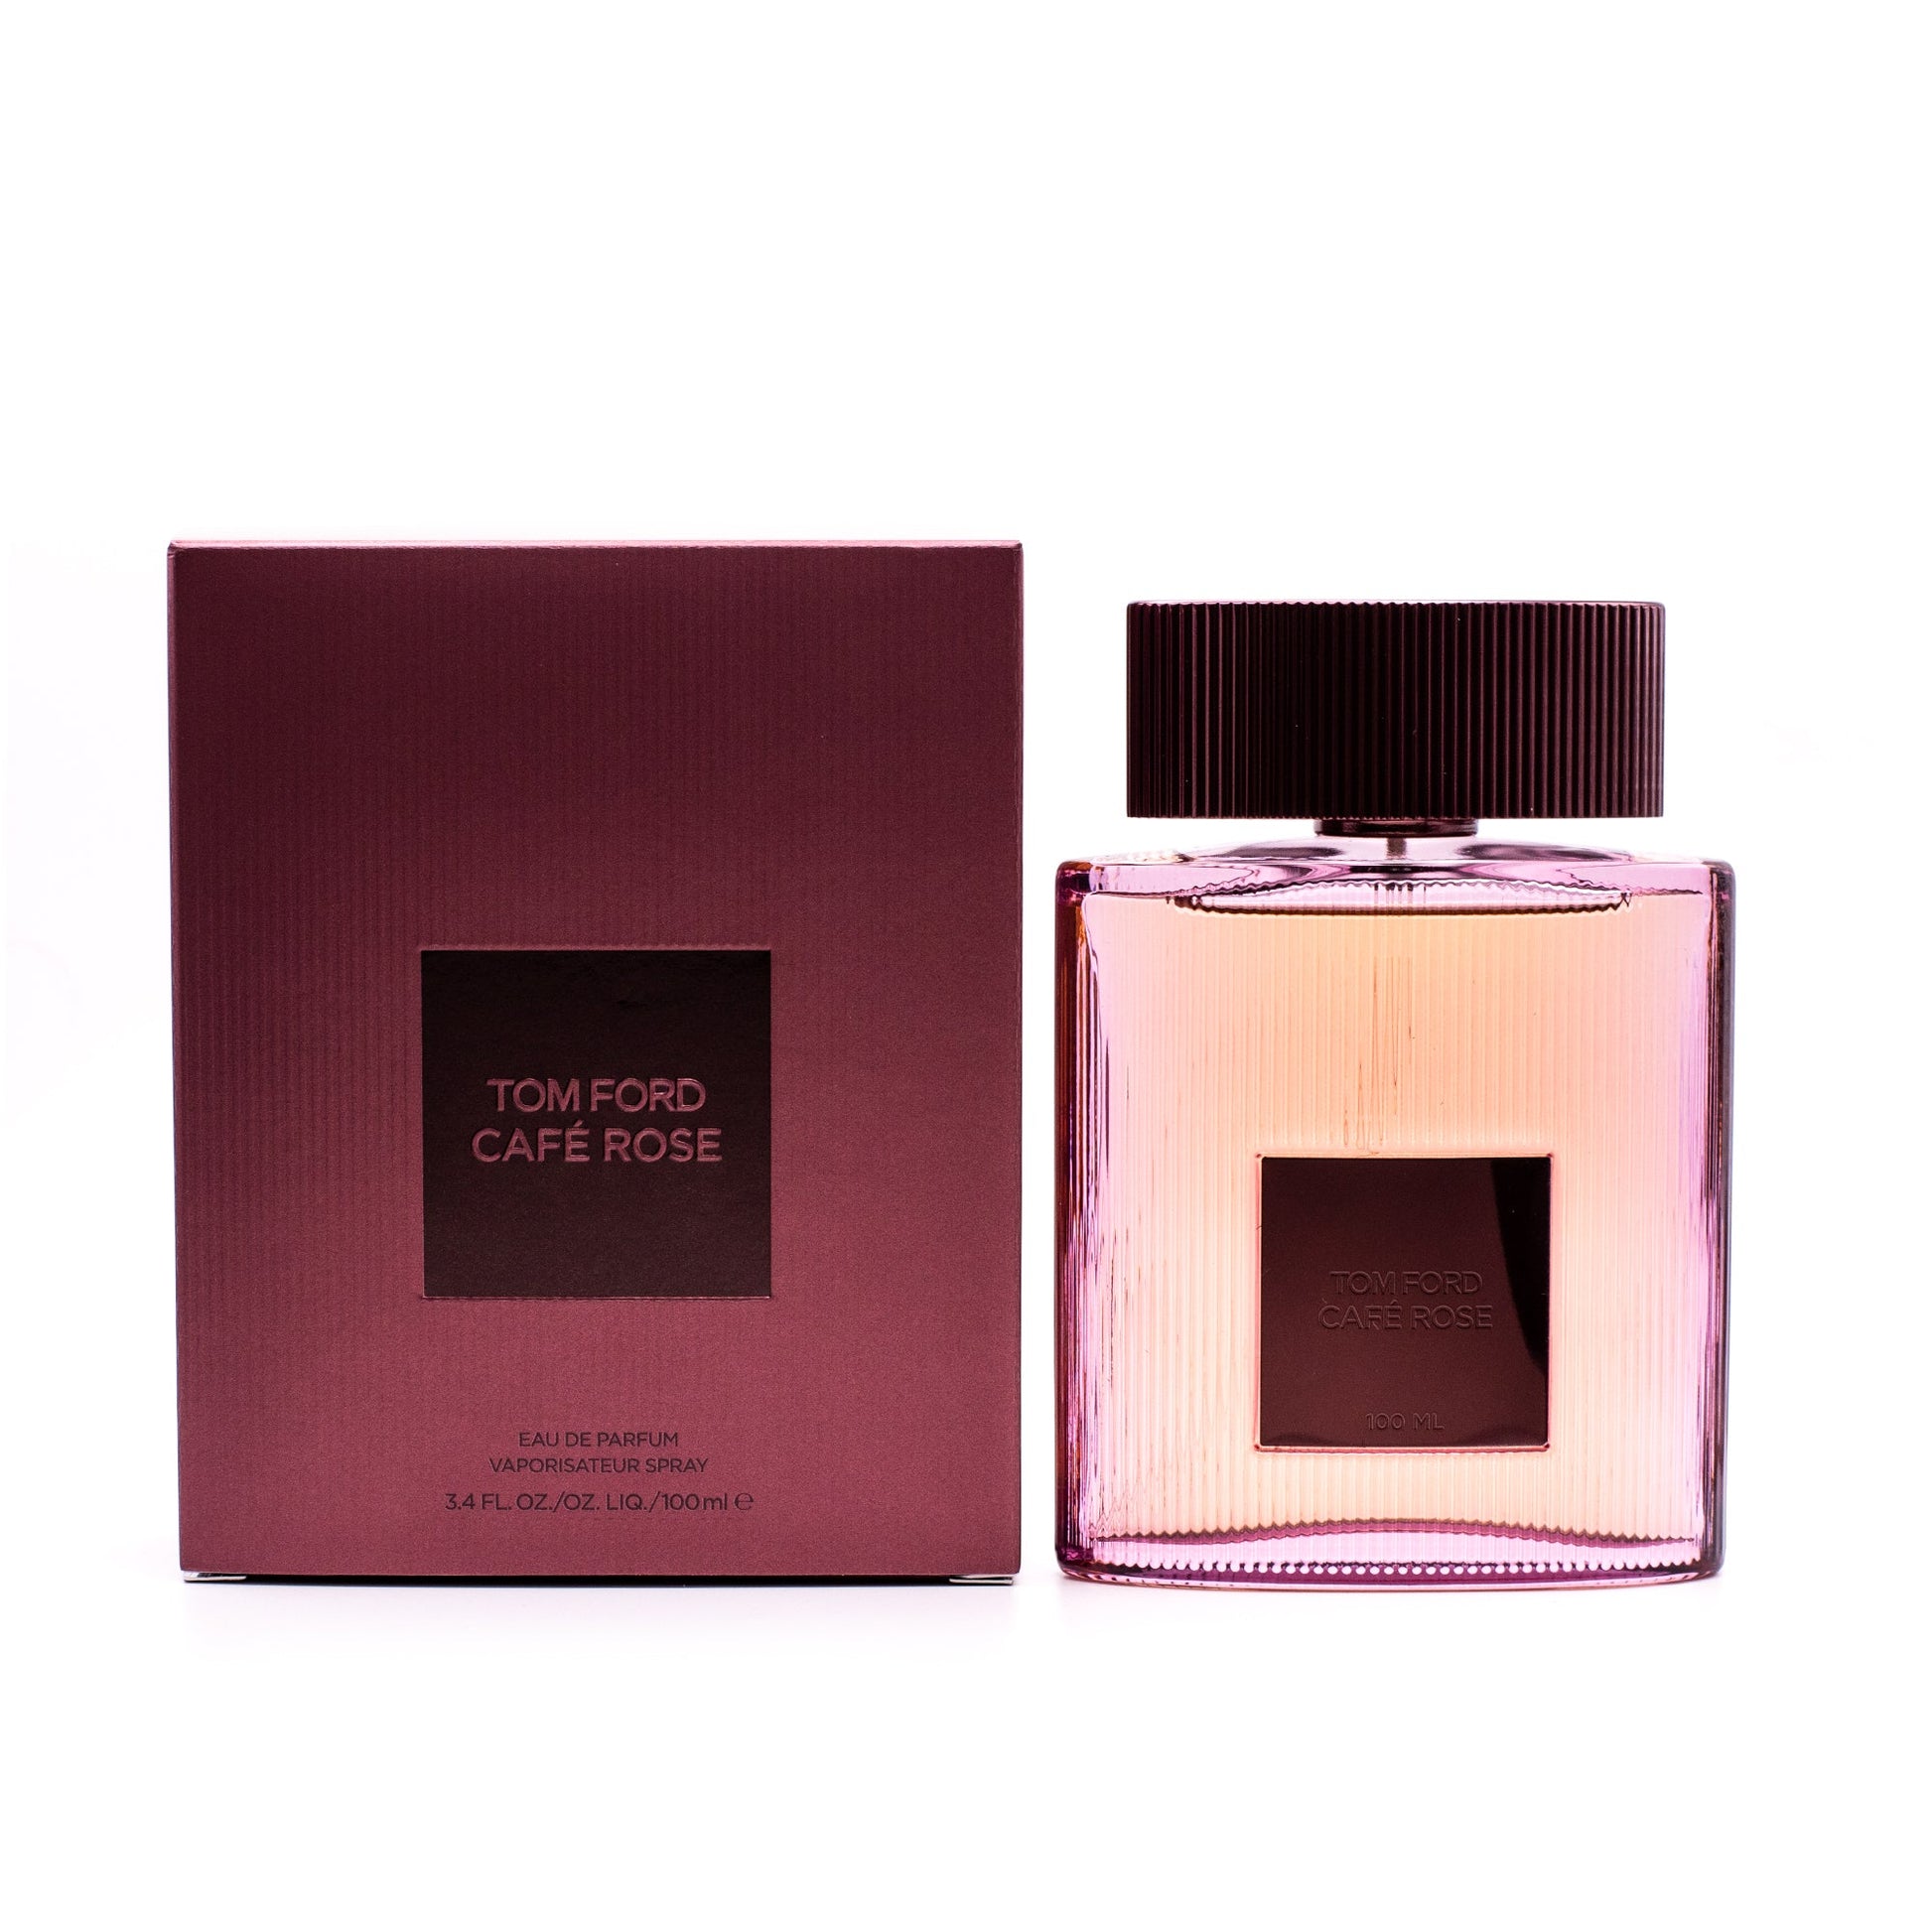 Cafe Rose Eau de Parfum Spray for Women by Tom Ford, Product image 1